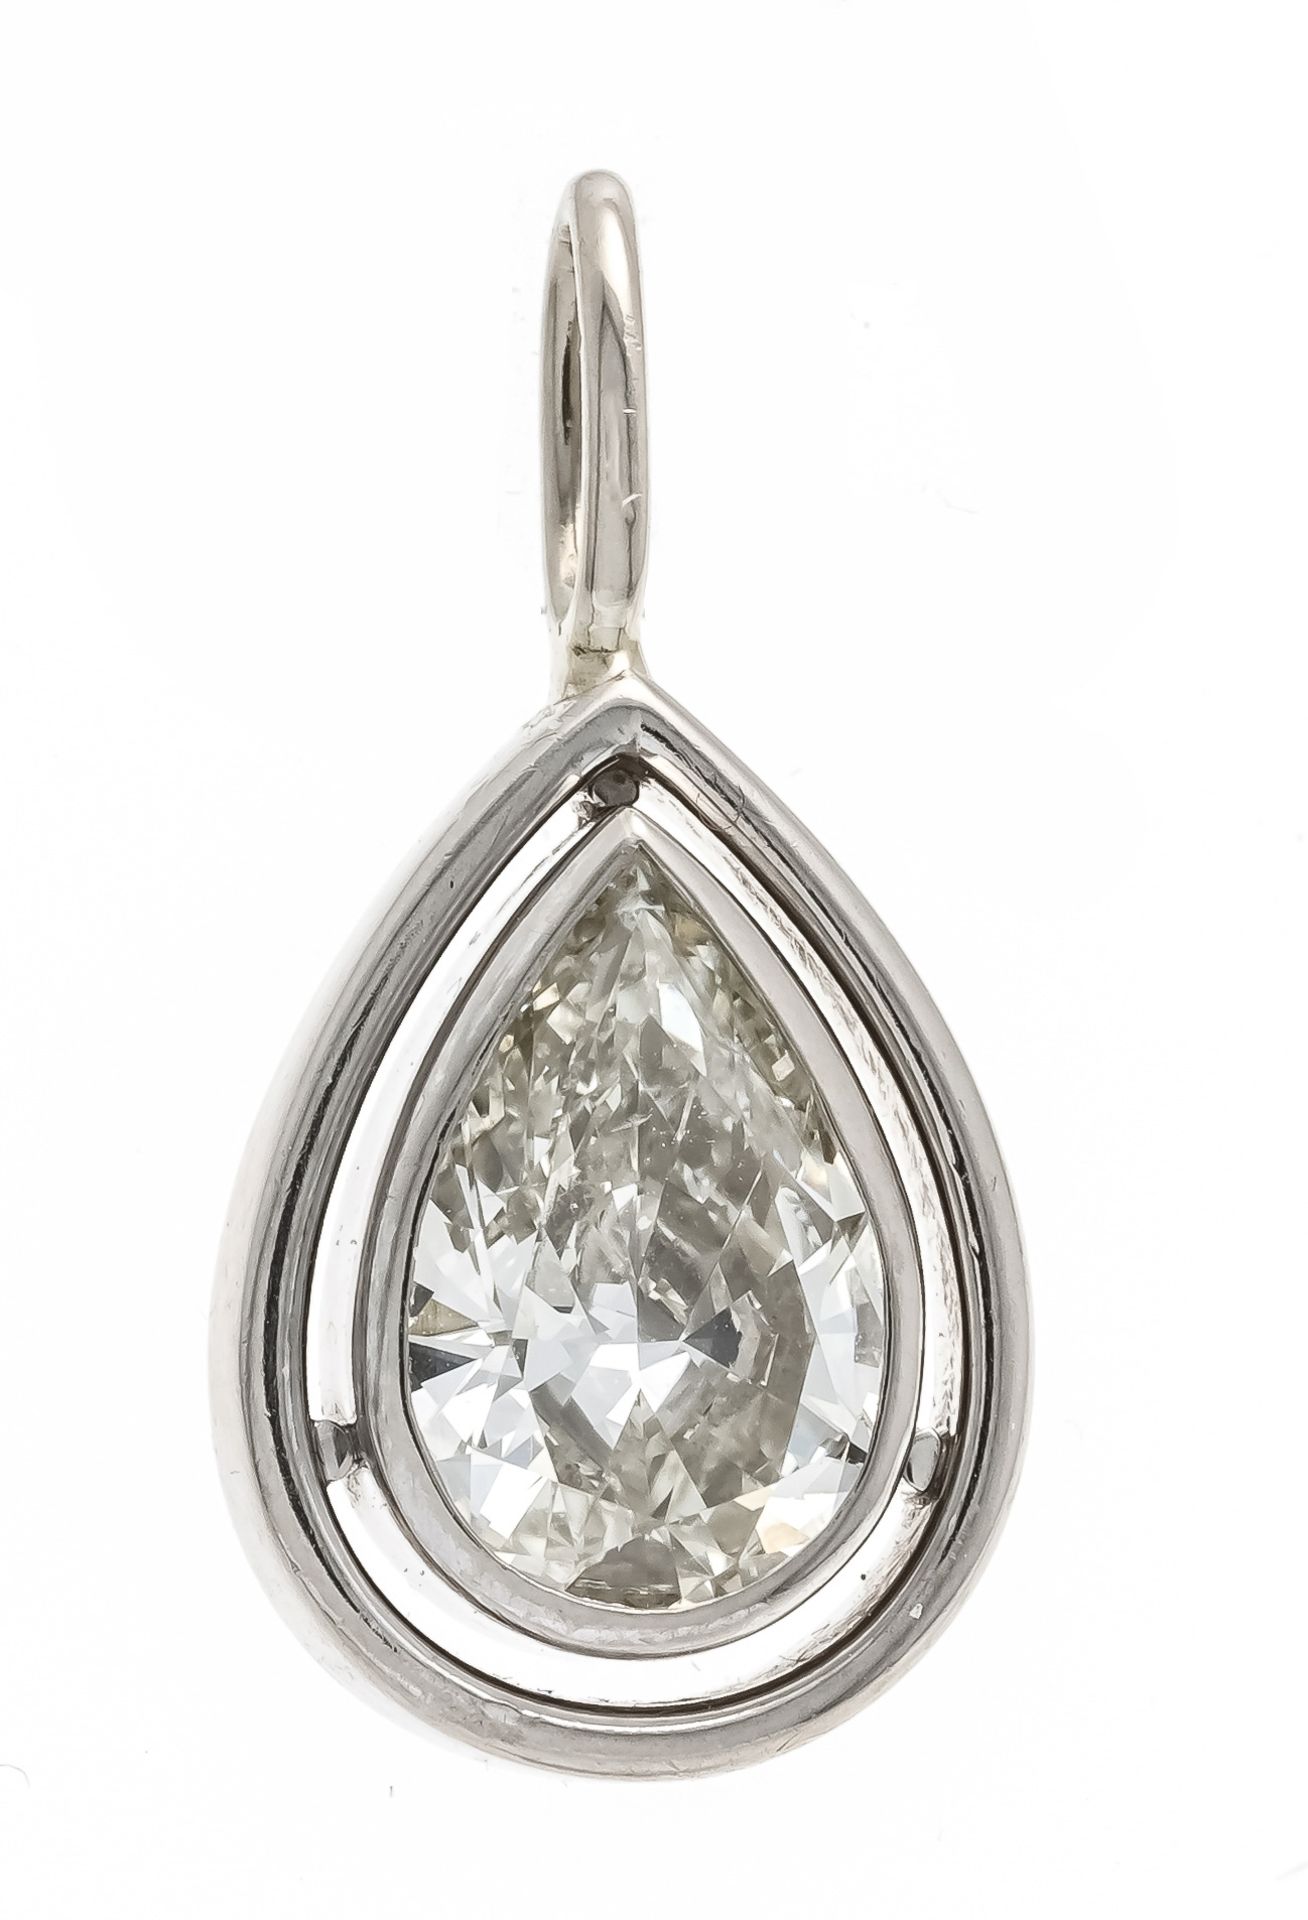 Diamond drop pendant WG 750/000 with a diamond drop 1.85 ct slightly tinted white (I-J)/flawless, l.